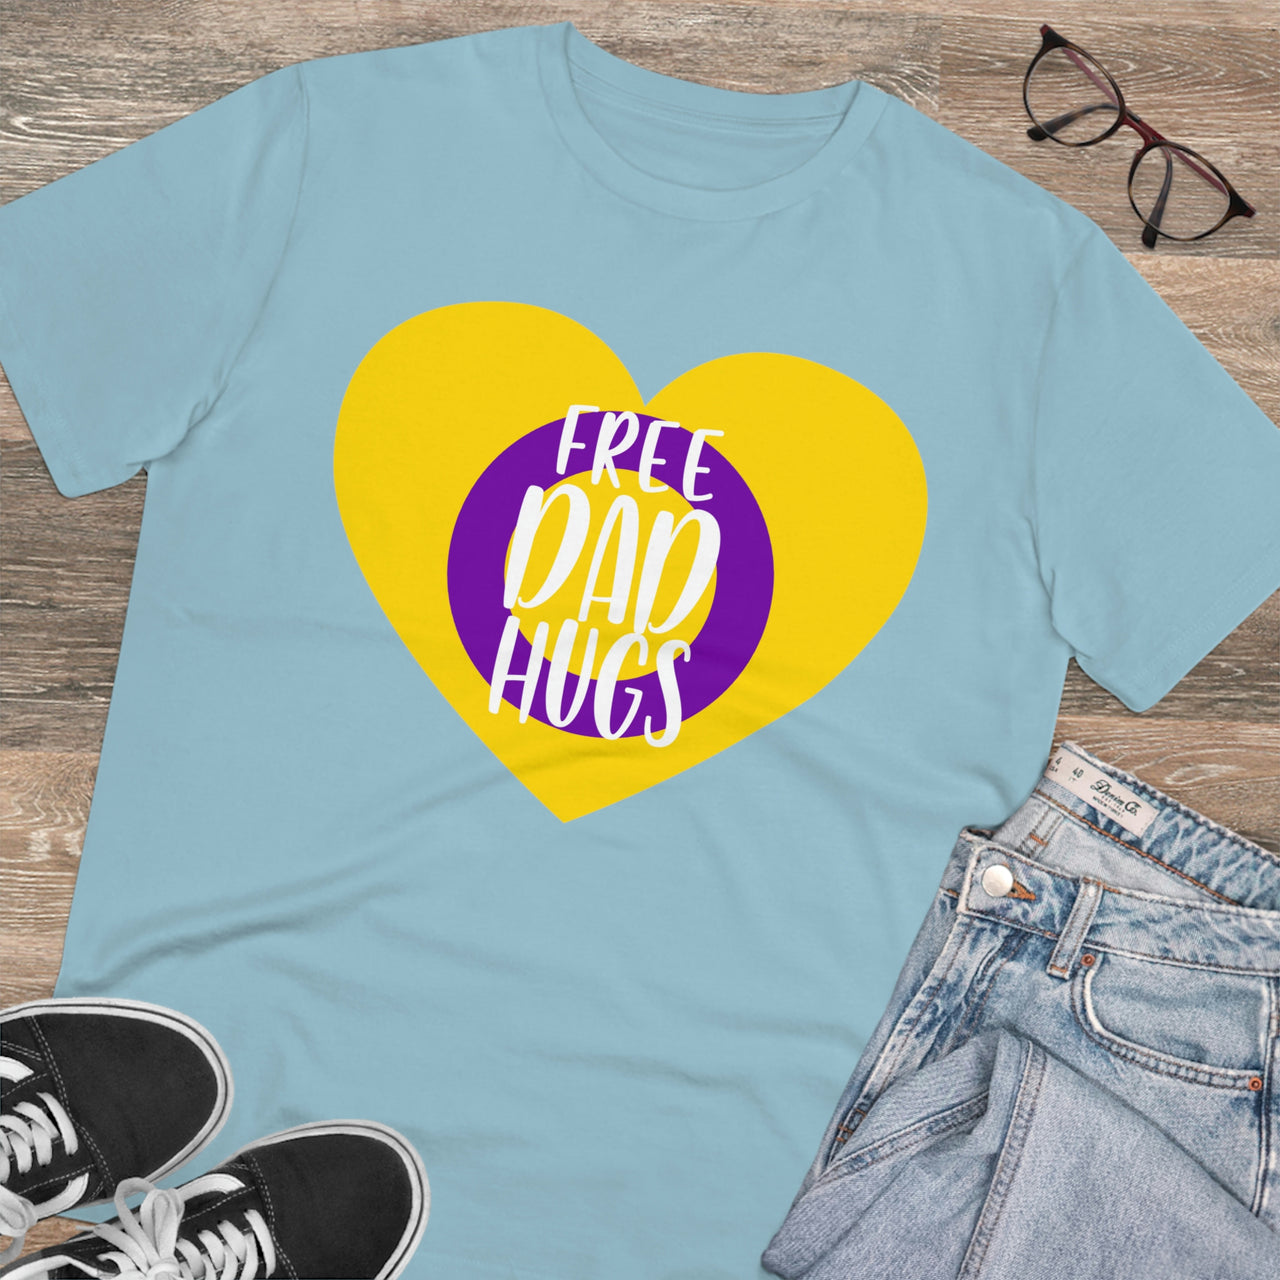 Intersexual Pride Flag T-shirt Unisex Size - Free Dad Hugs Printify